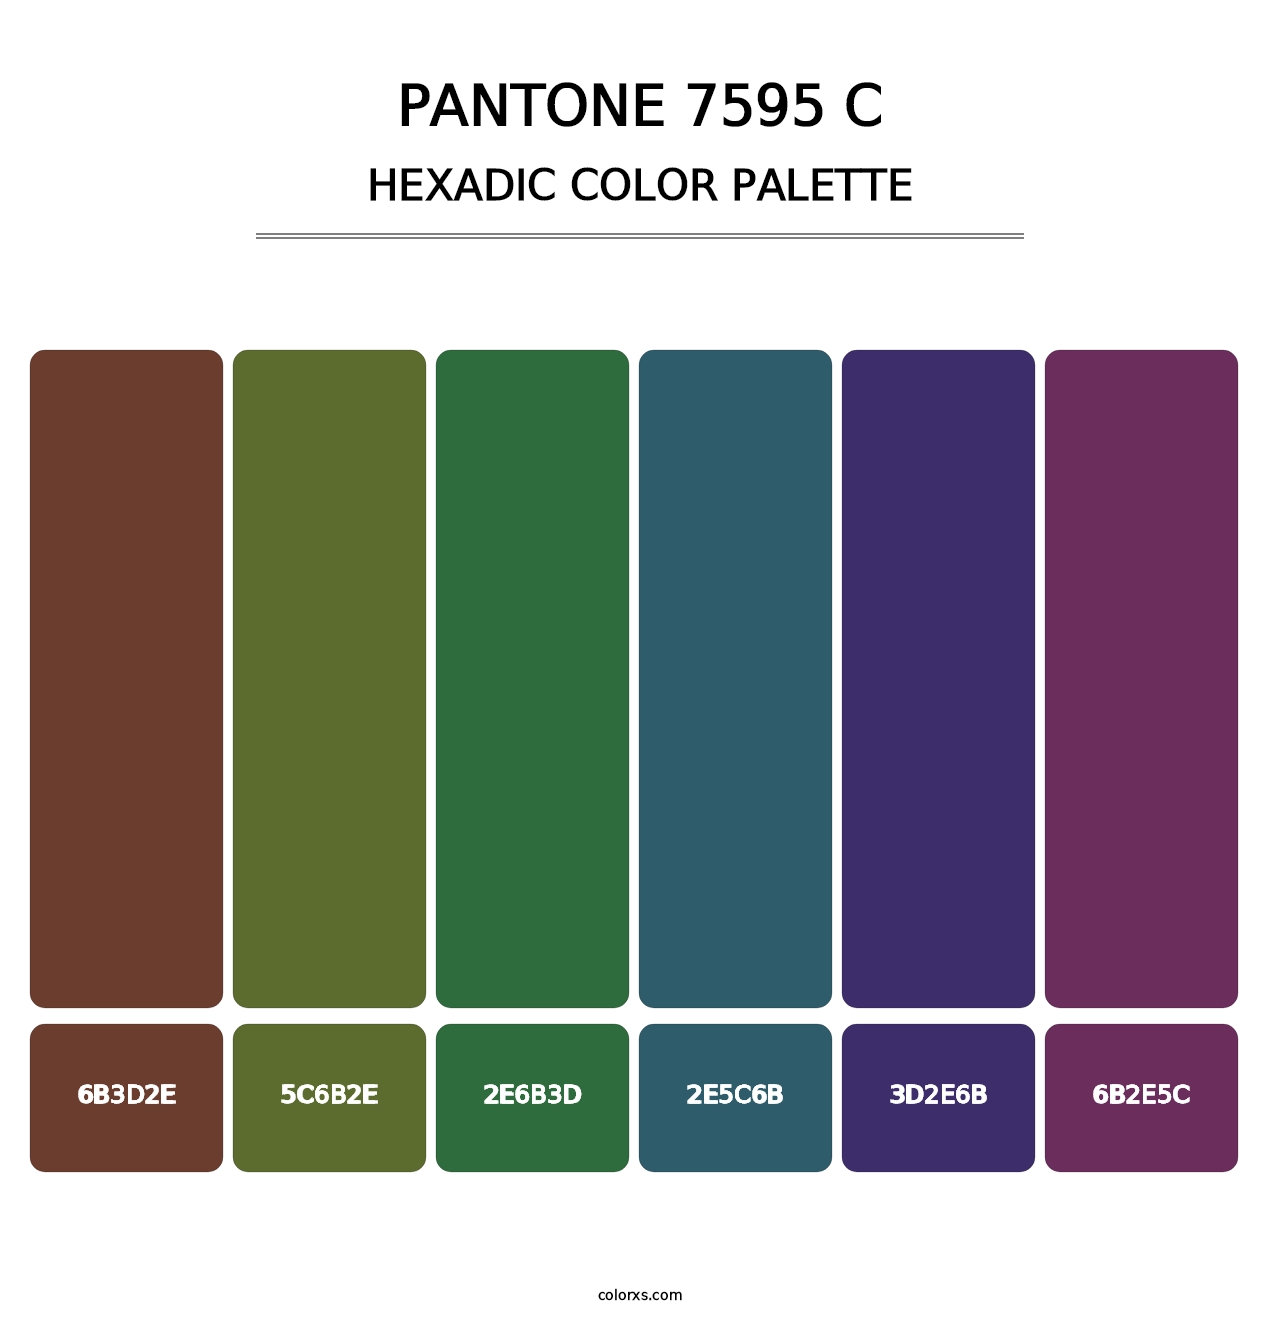 PANTONE 7595 C - Hexadic Color Palette